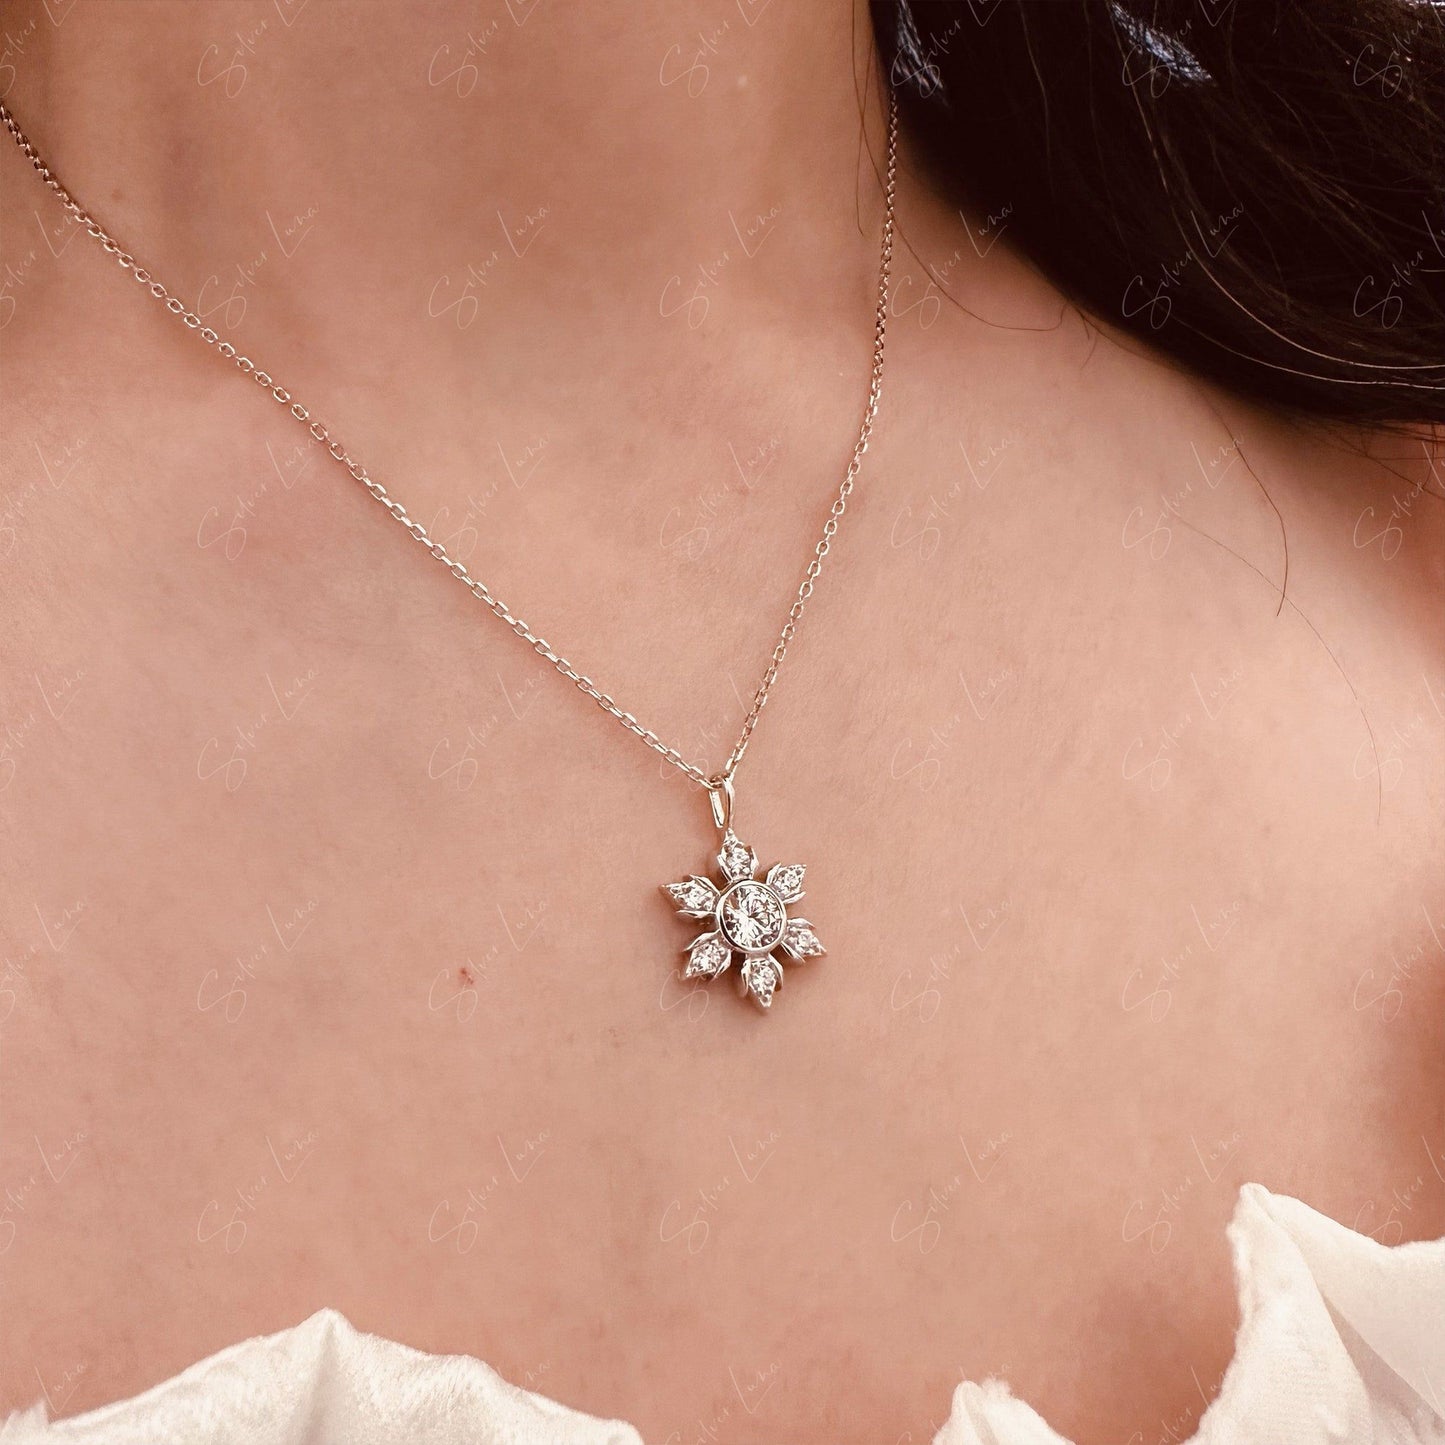 Snowflake Moissanite pendant necklace